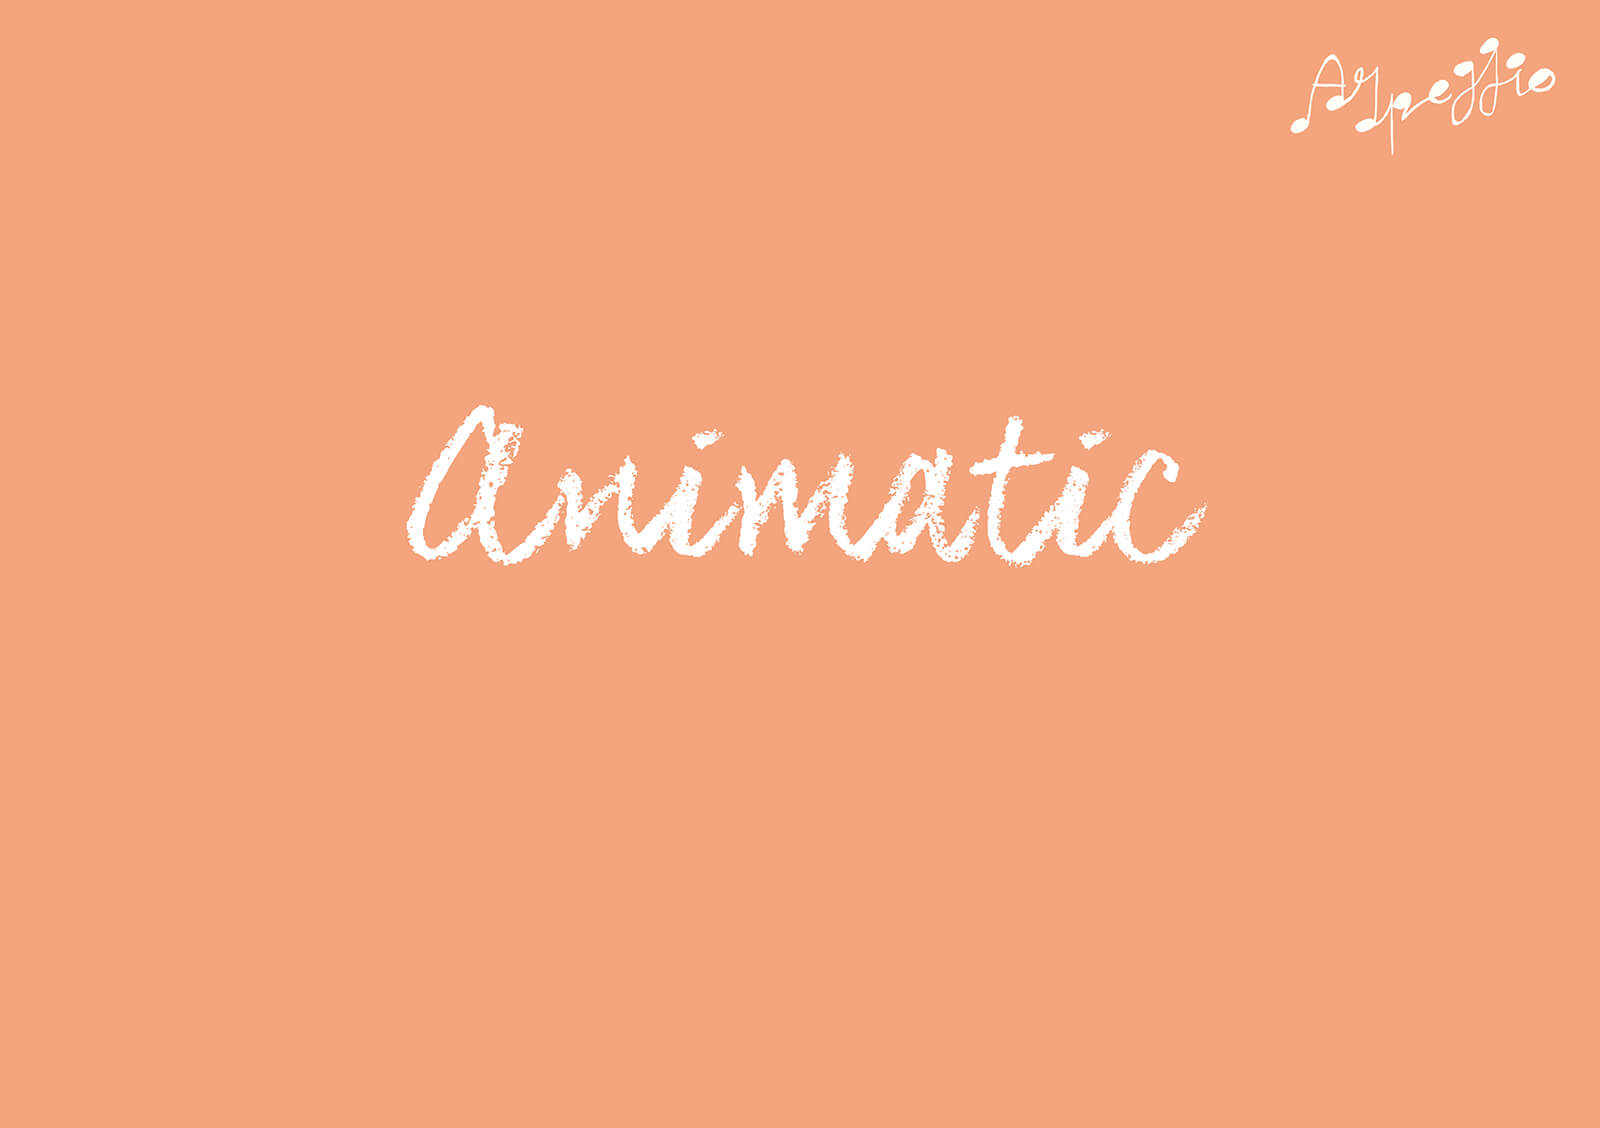 Presentation slide for the film Arpeggio, reading "Animatic" in white script on an orange background